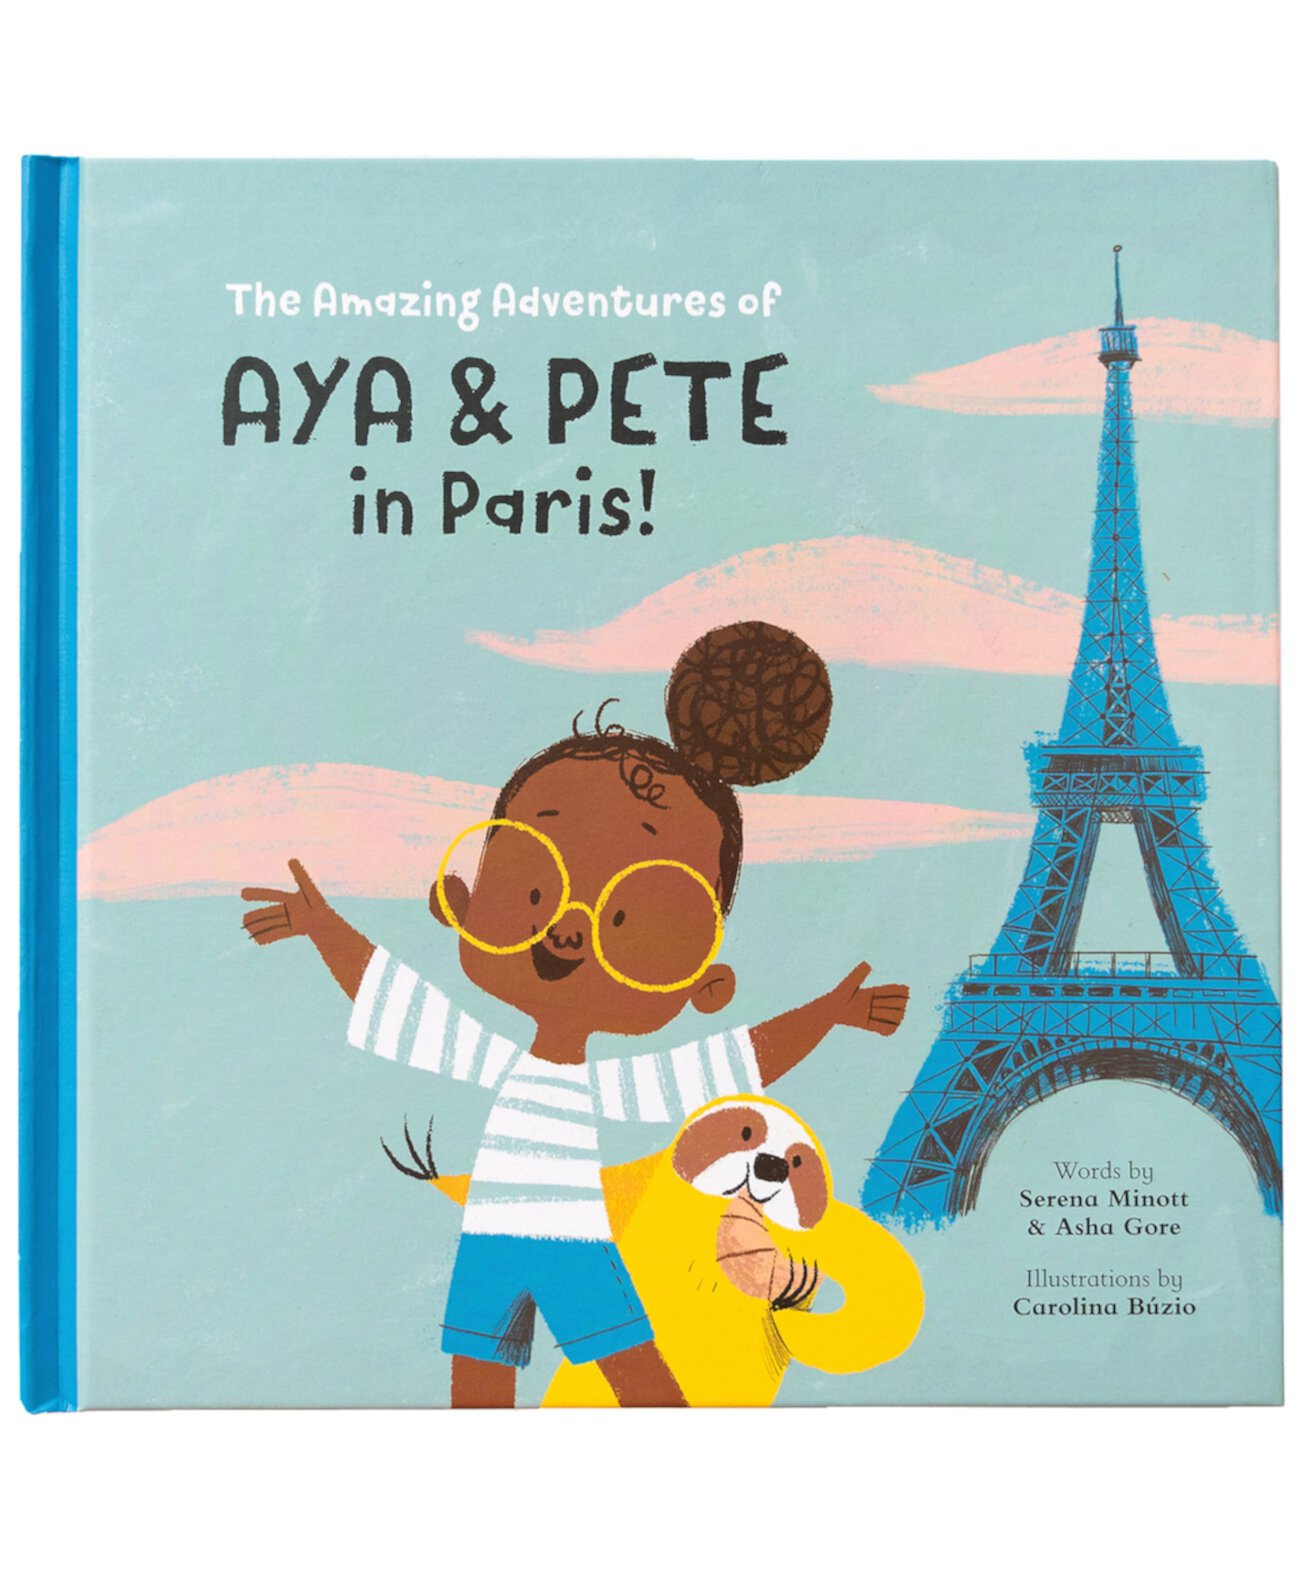 Aya and Pete in Paris by Serena Minott and Asha Gore Aya & Pete